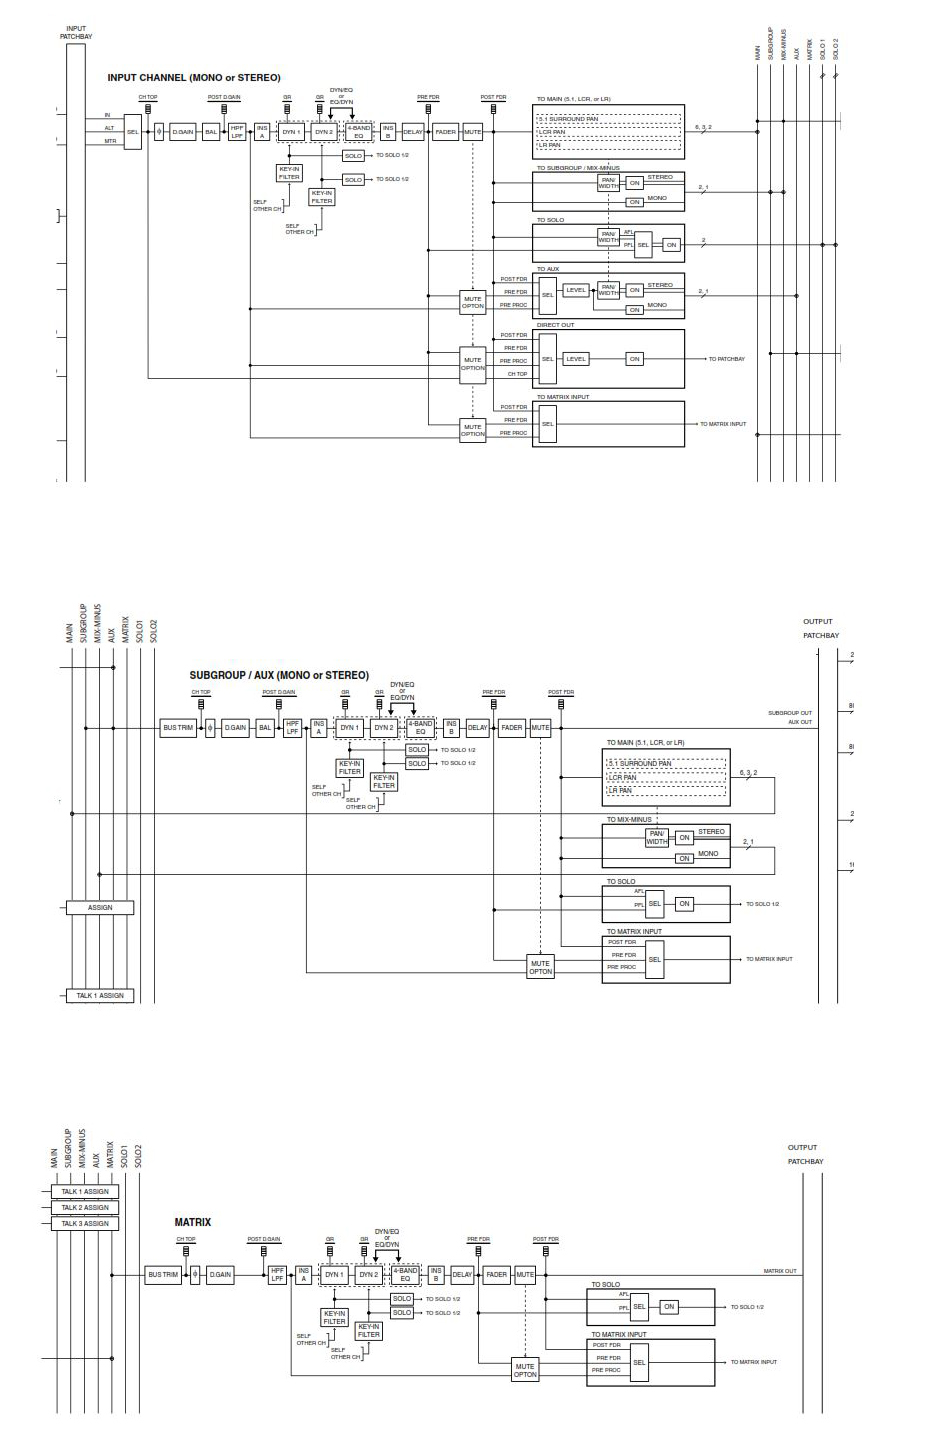 Схема маршрутизации входного сигнала М-5000